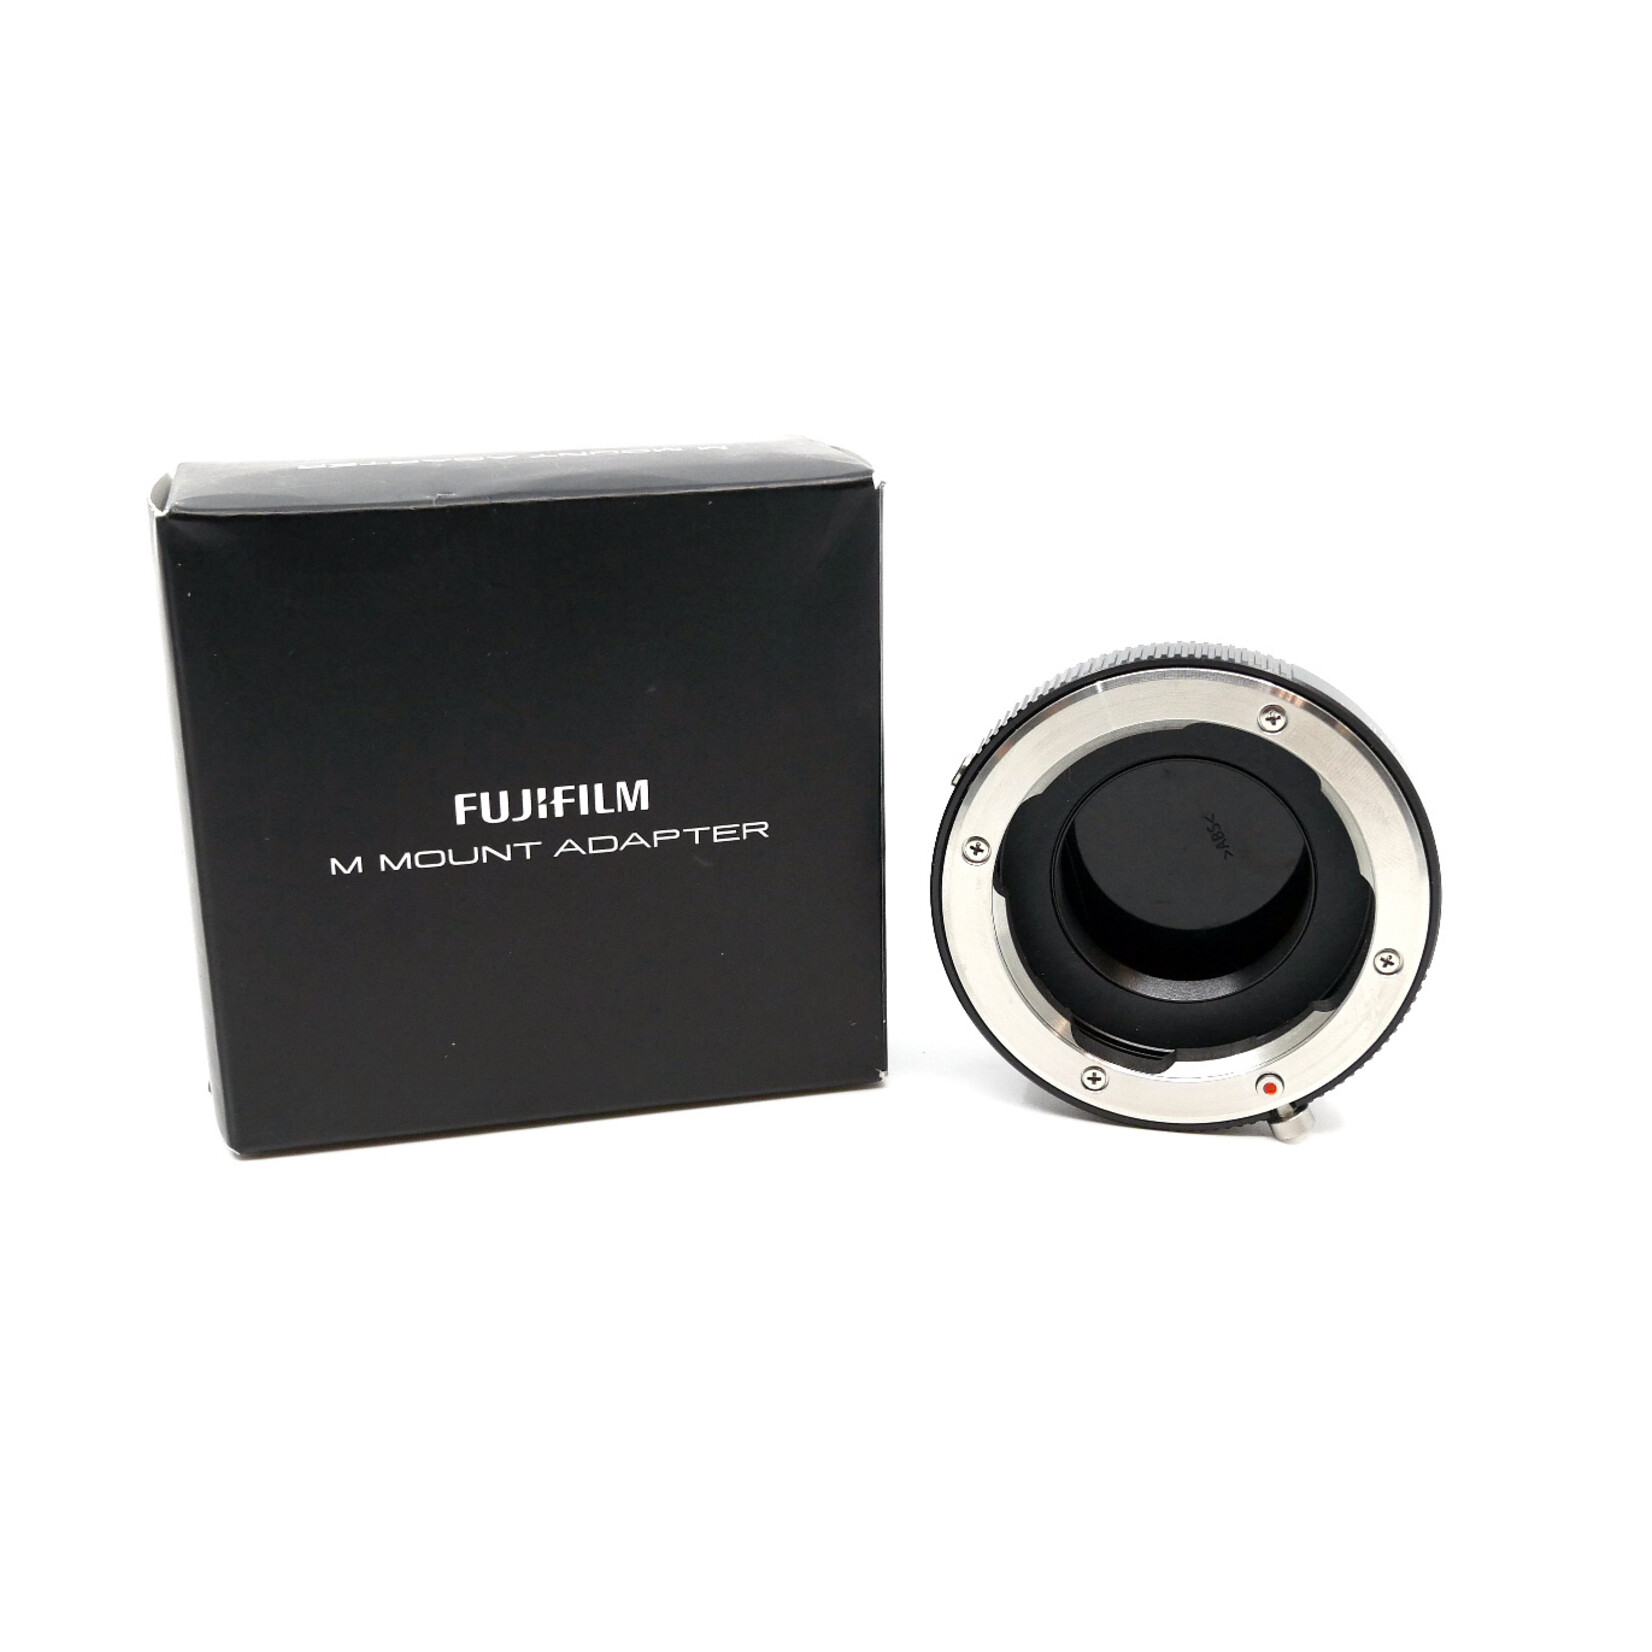 Fujifilm Fujifilm M Mount Adapter (Used)